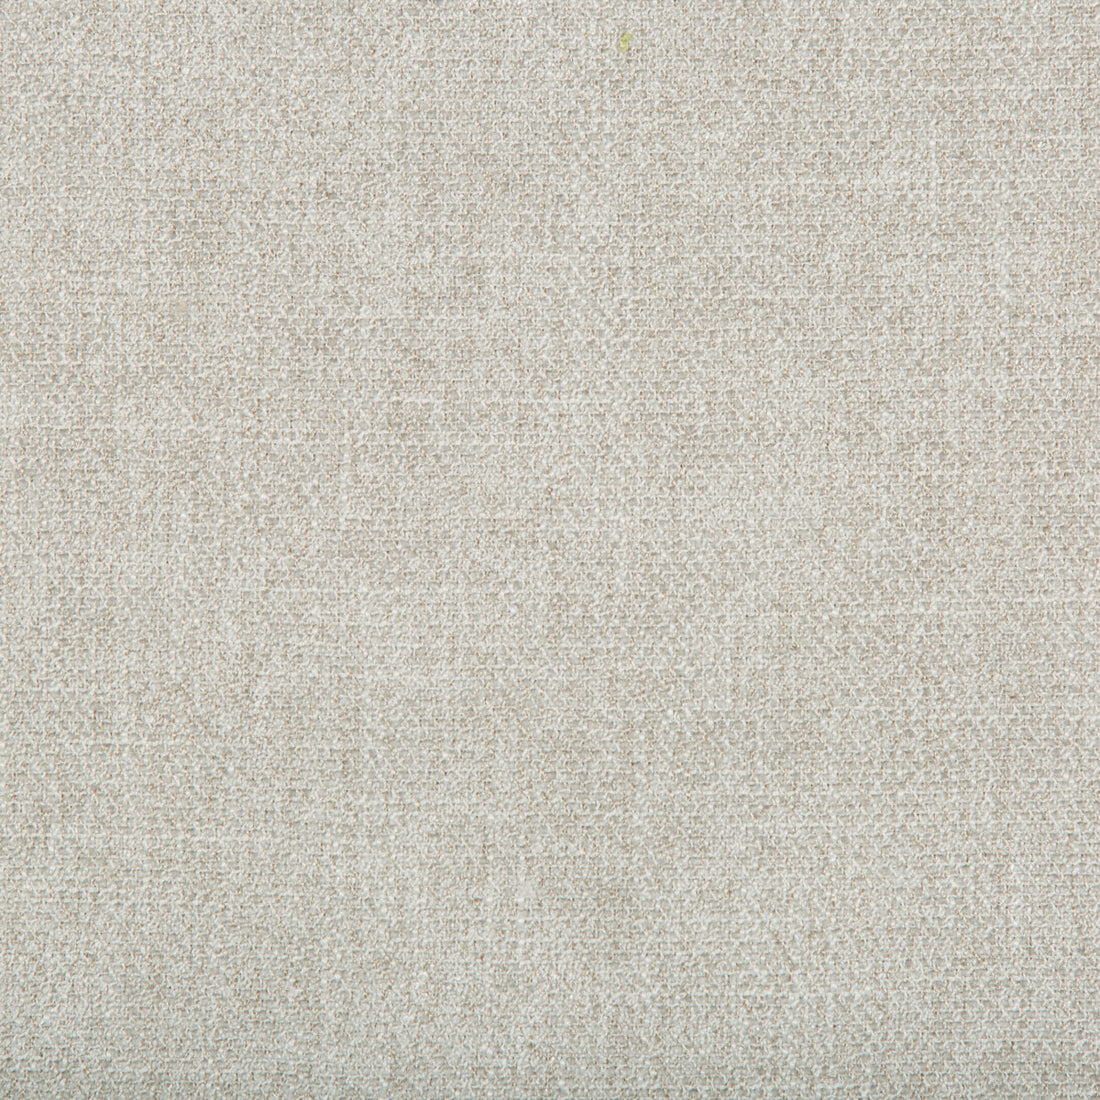 Kf Smt fabric - pattern 35060.1511.0 - by Kravet Smart in the Performance Kravetarmor collection